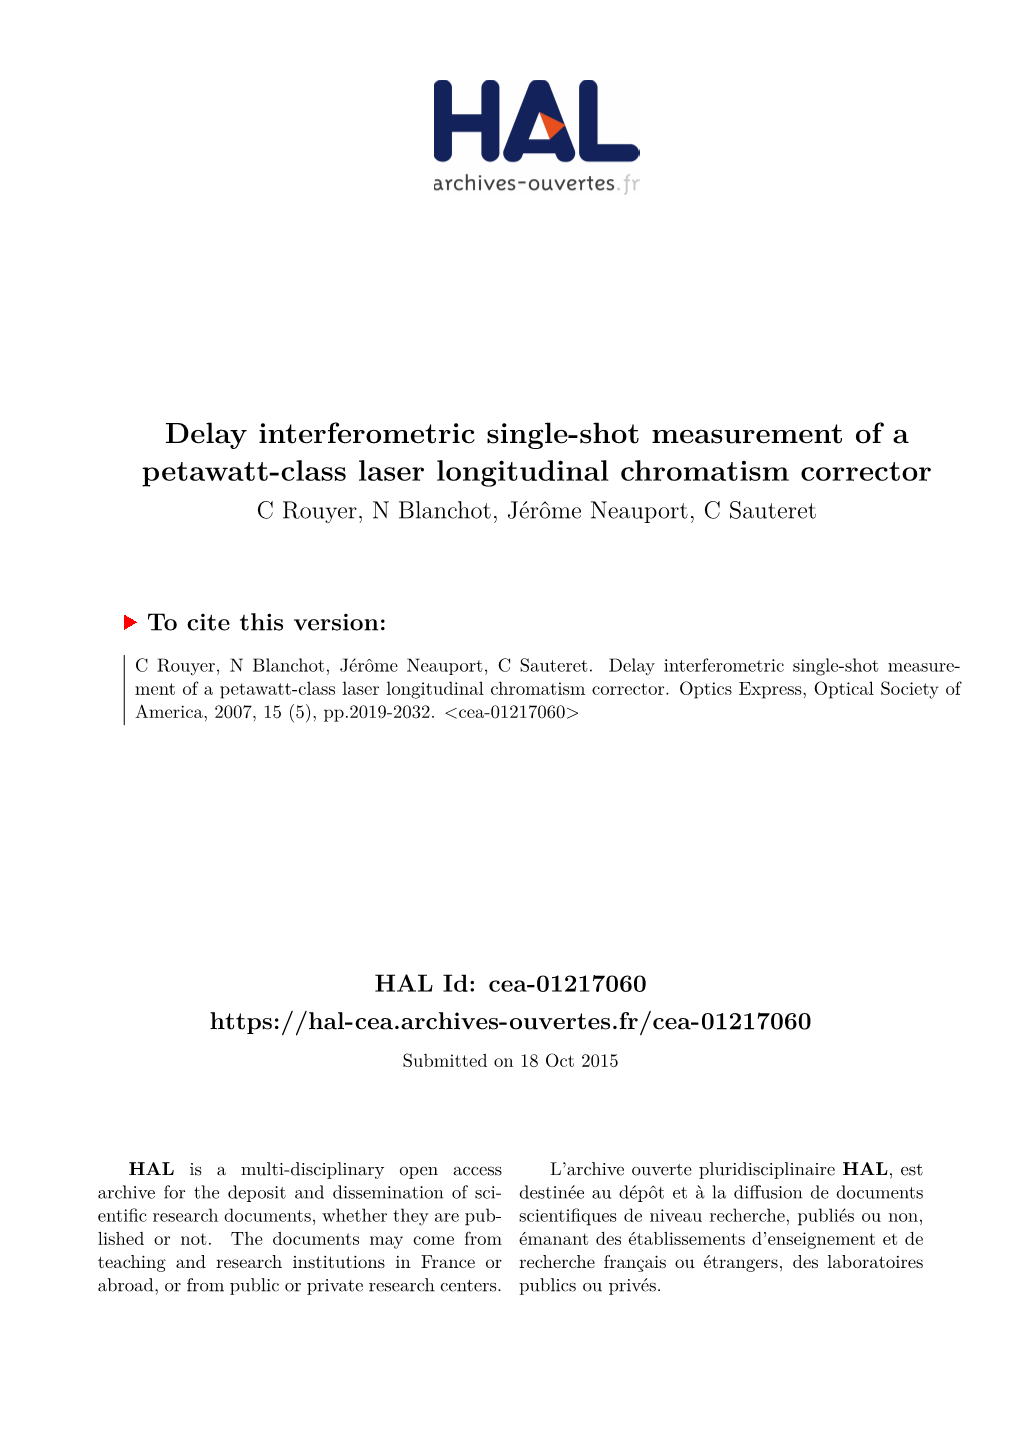 Delay Interferometric Single-Shot Measurement of a Petawatt-Class Laser Longitudinal Chromatism Corrector C Rouyer, N Blanchot, Jérôme Neauport, C Sauteret